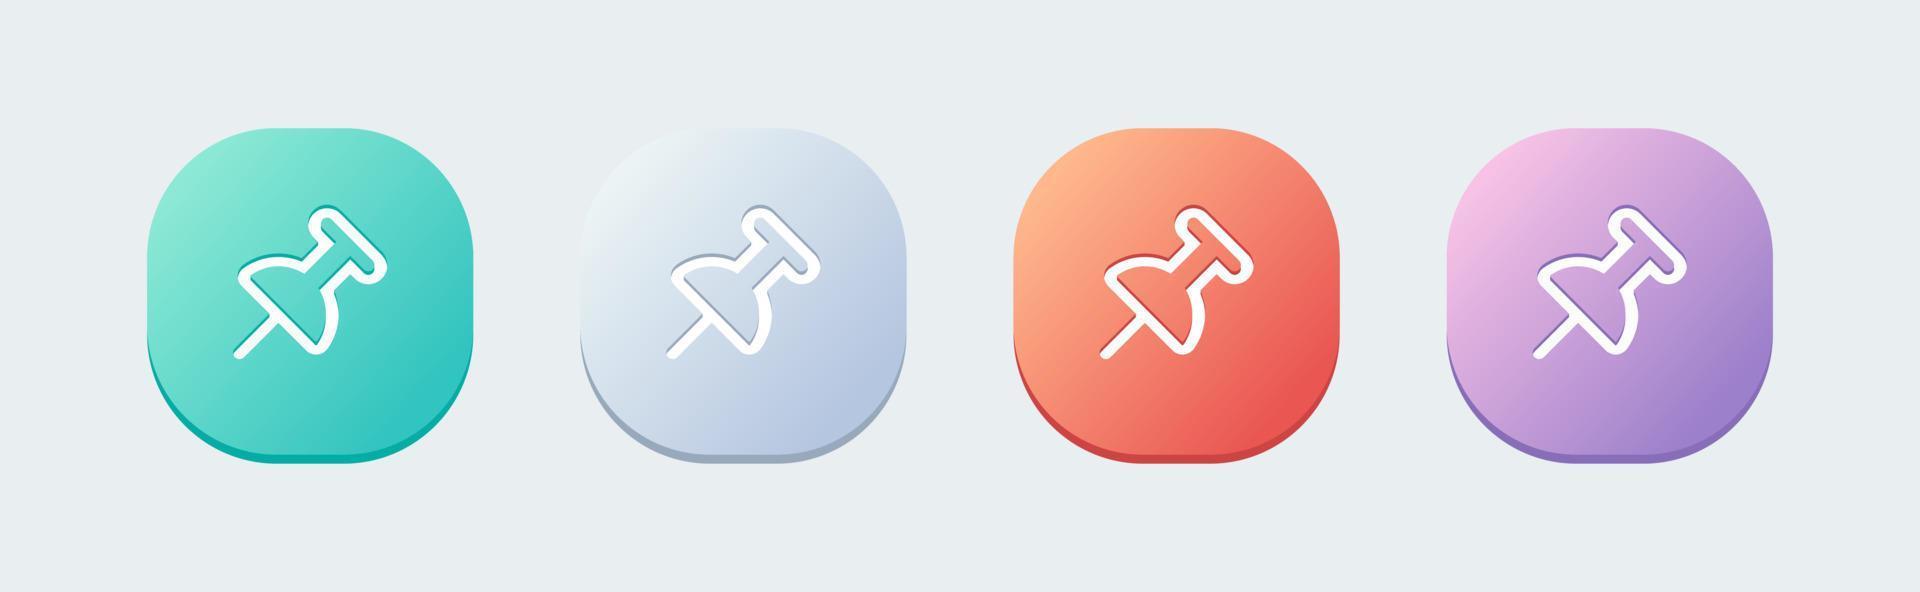 Thumbtack line icon in flat design style. Push pin symbol vector illustration.